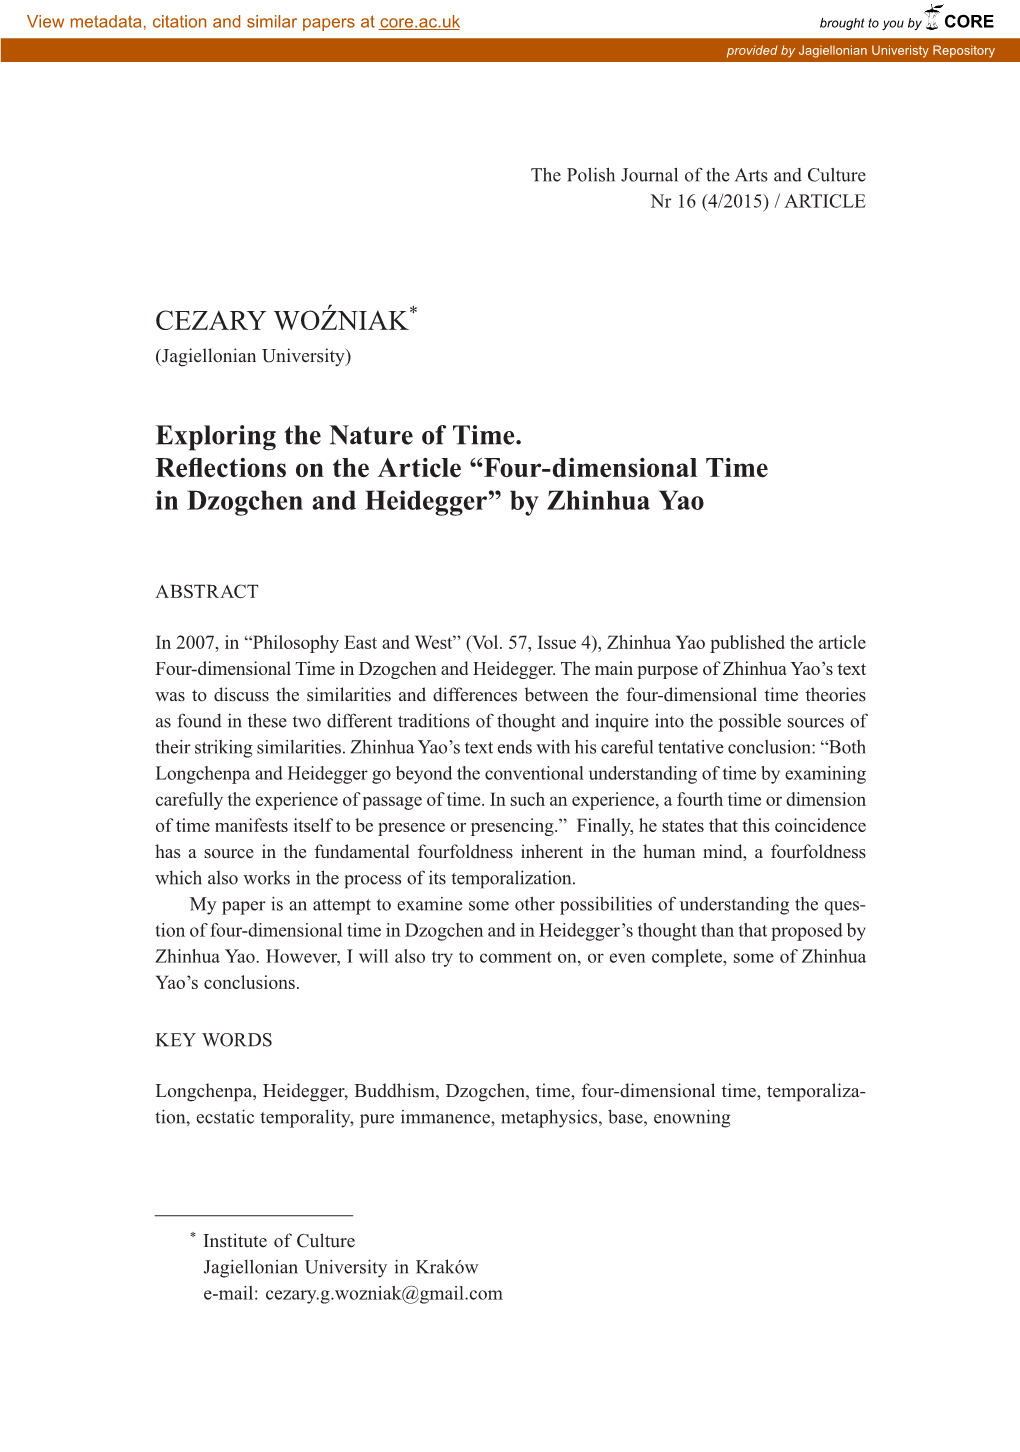 Four-Dimensional Time in Dzogchen and Heidegger” by Zhinhua Yao